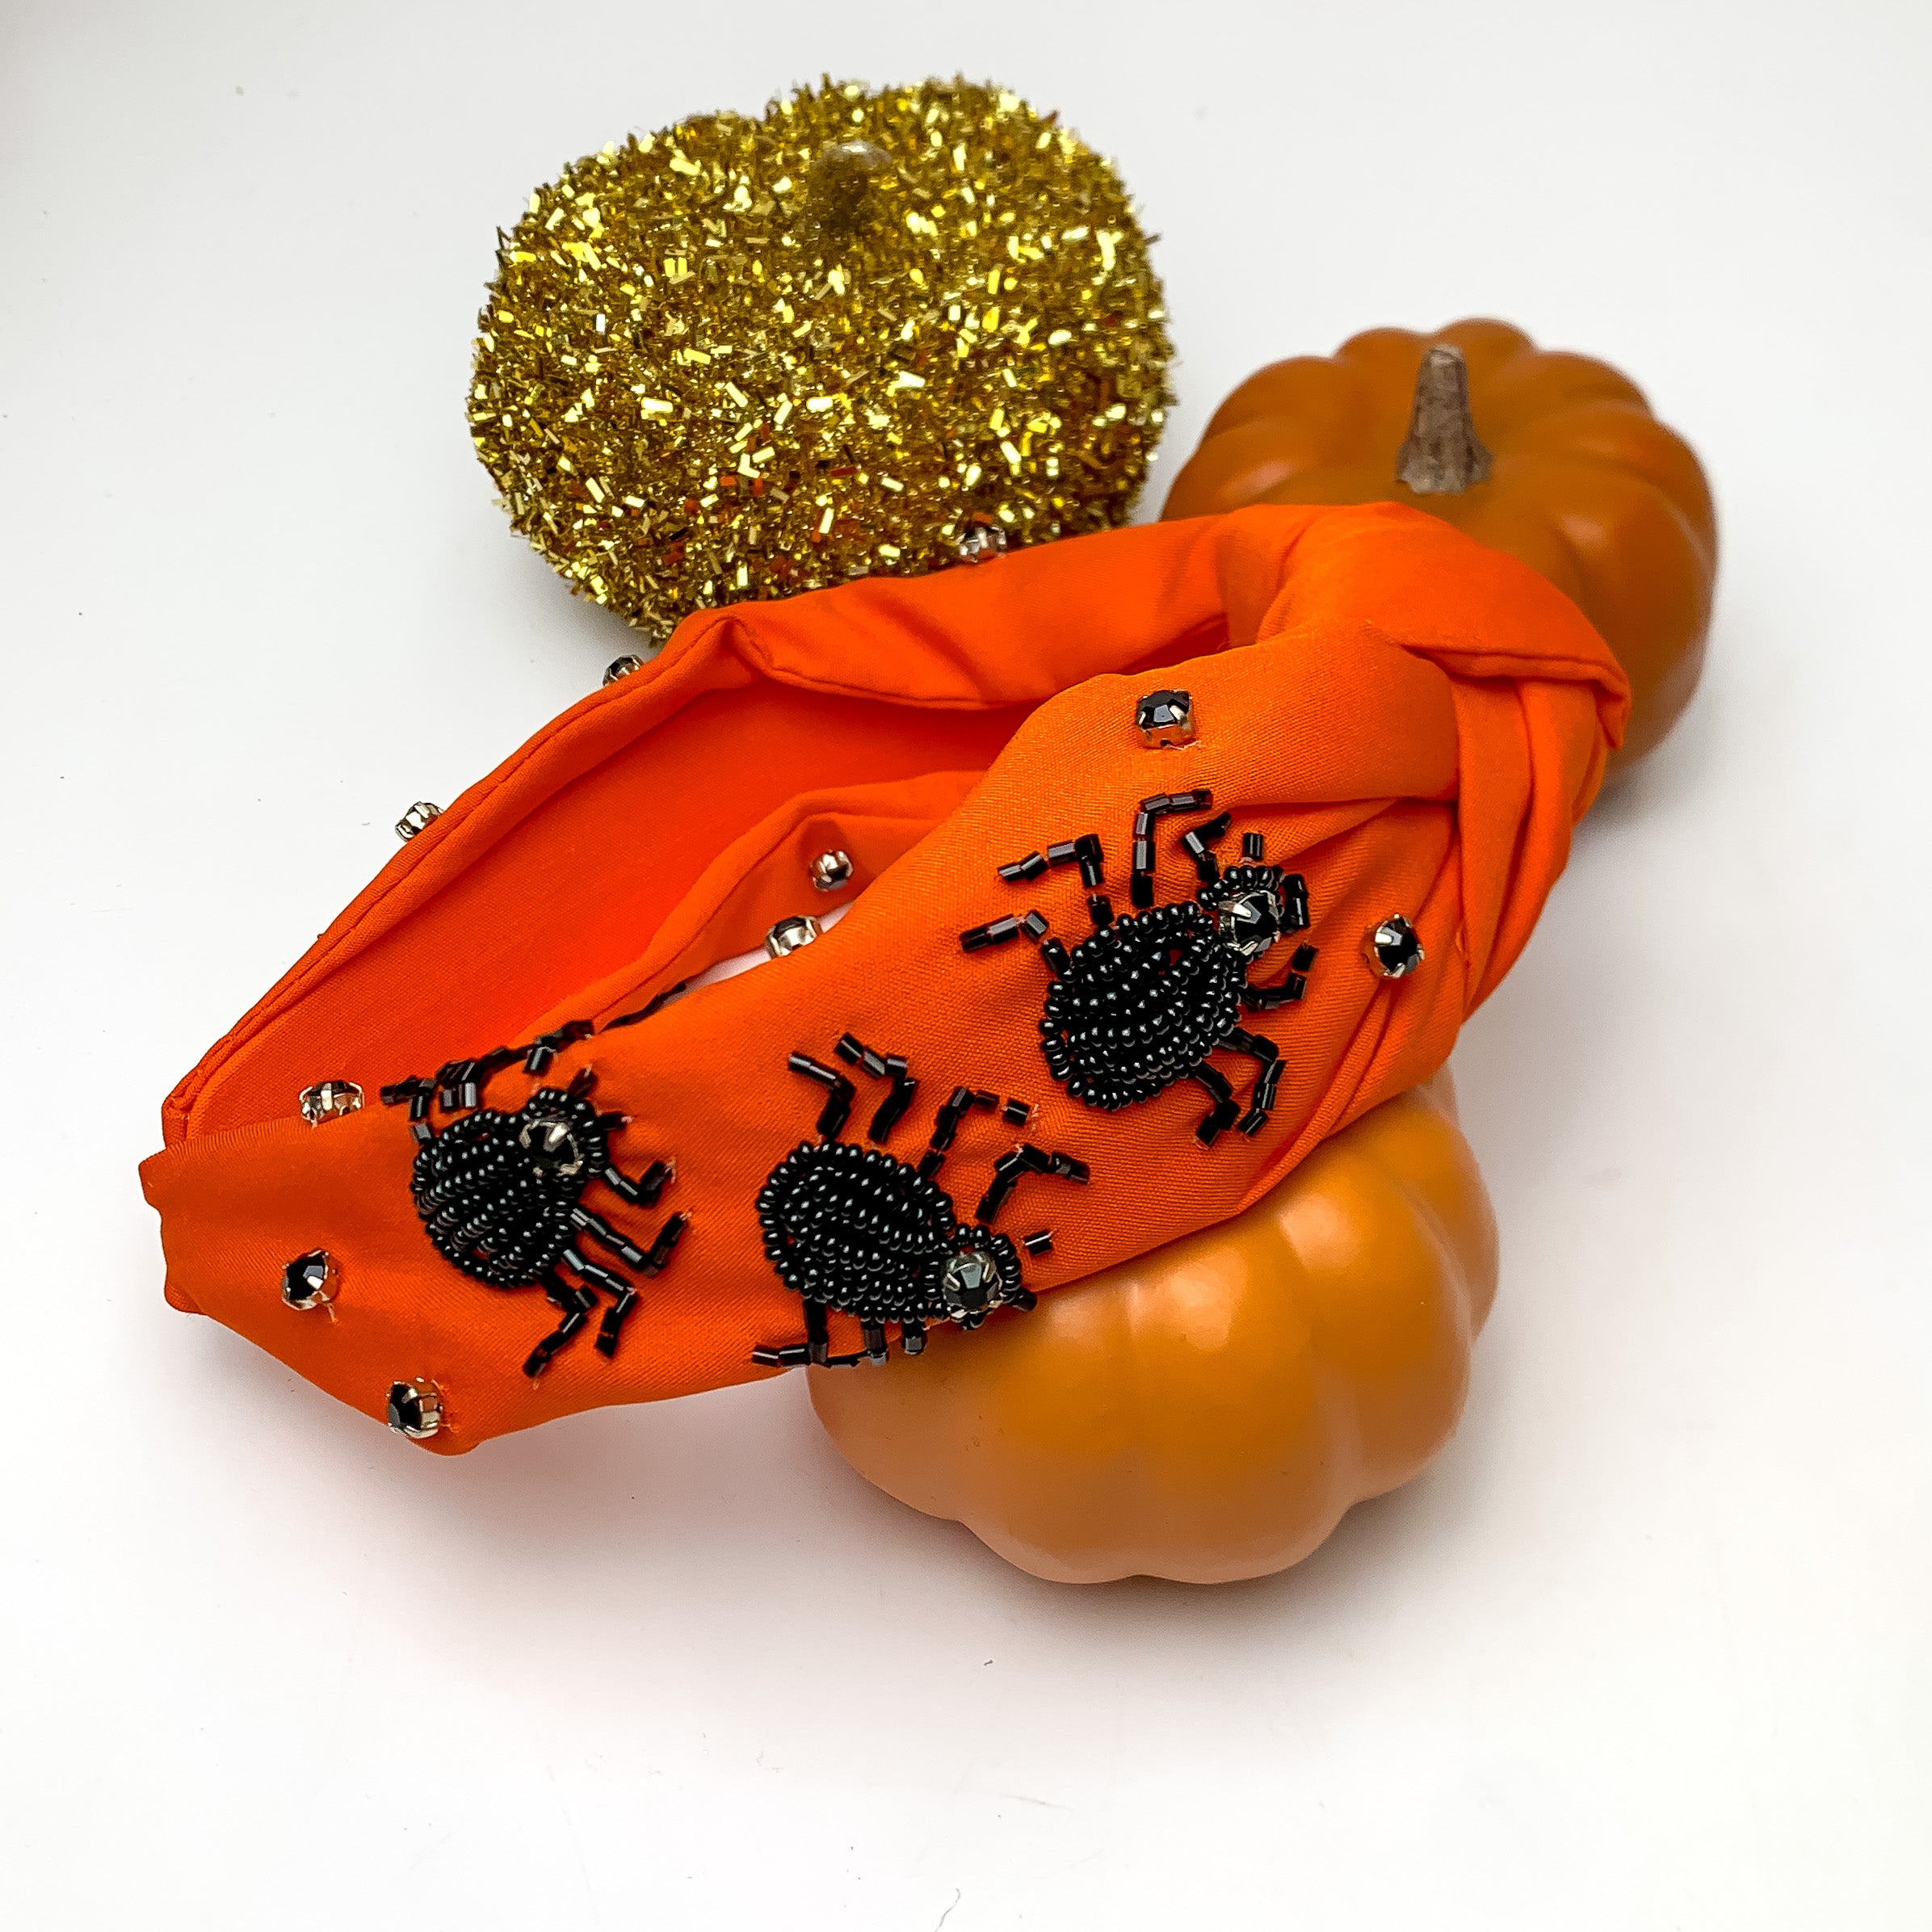 Halloween Orange Headband With Black Spiders. This headband is pictured next to decorative pumpkins.